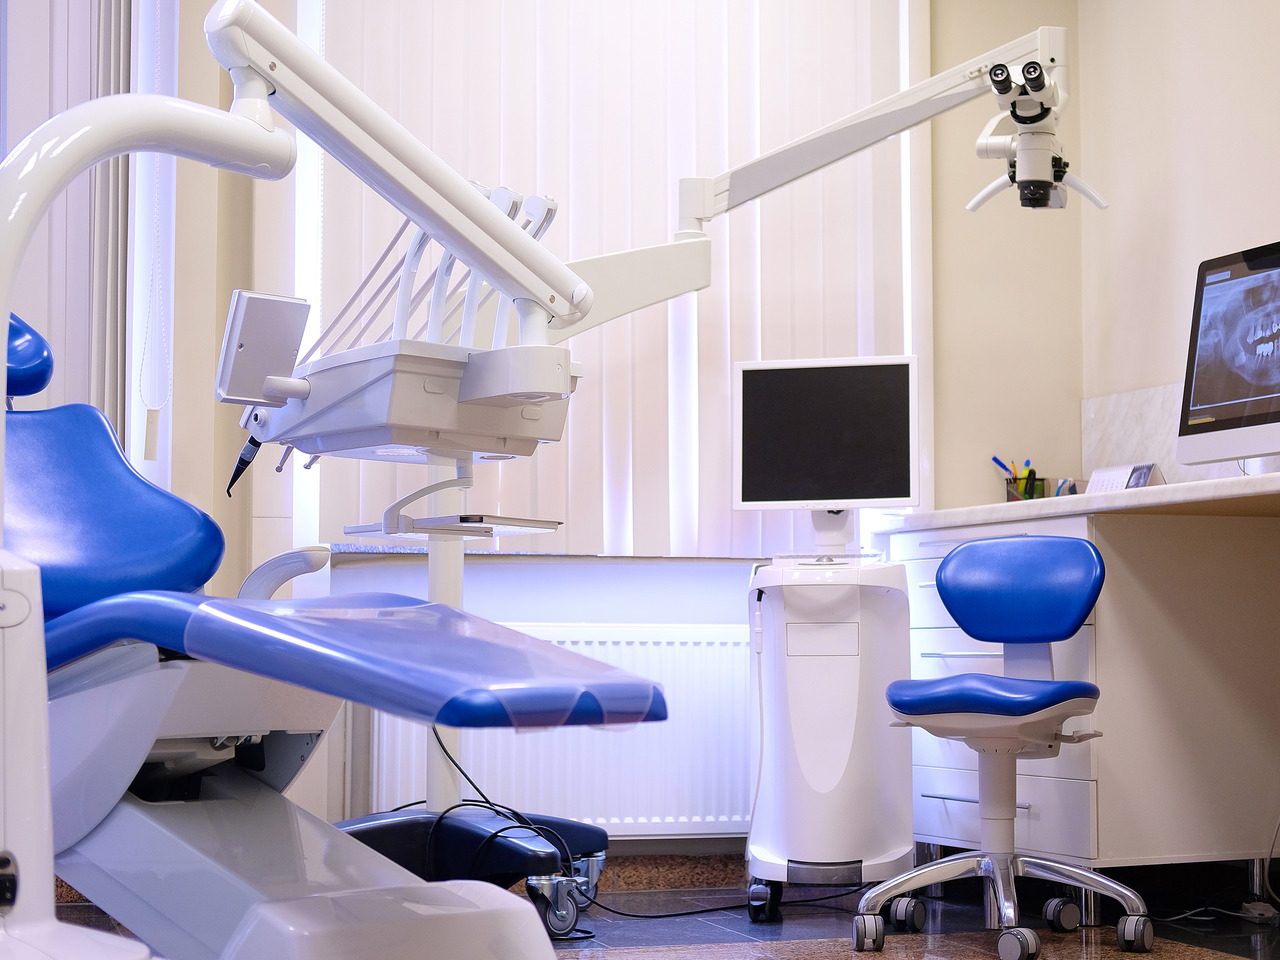 Concept interior of new modern dental clinic office. Dental equipment